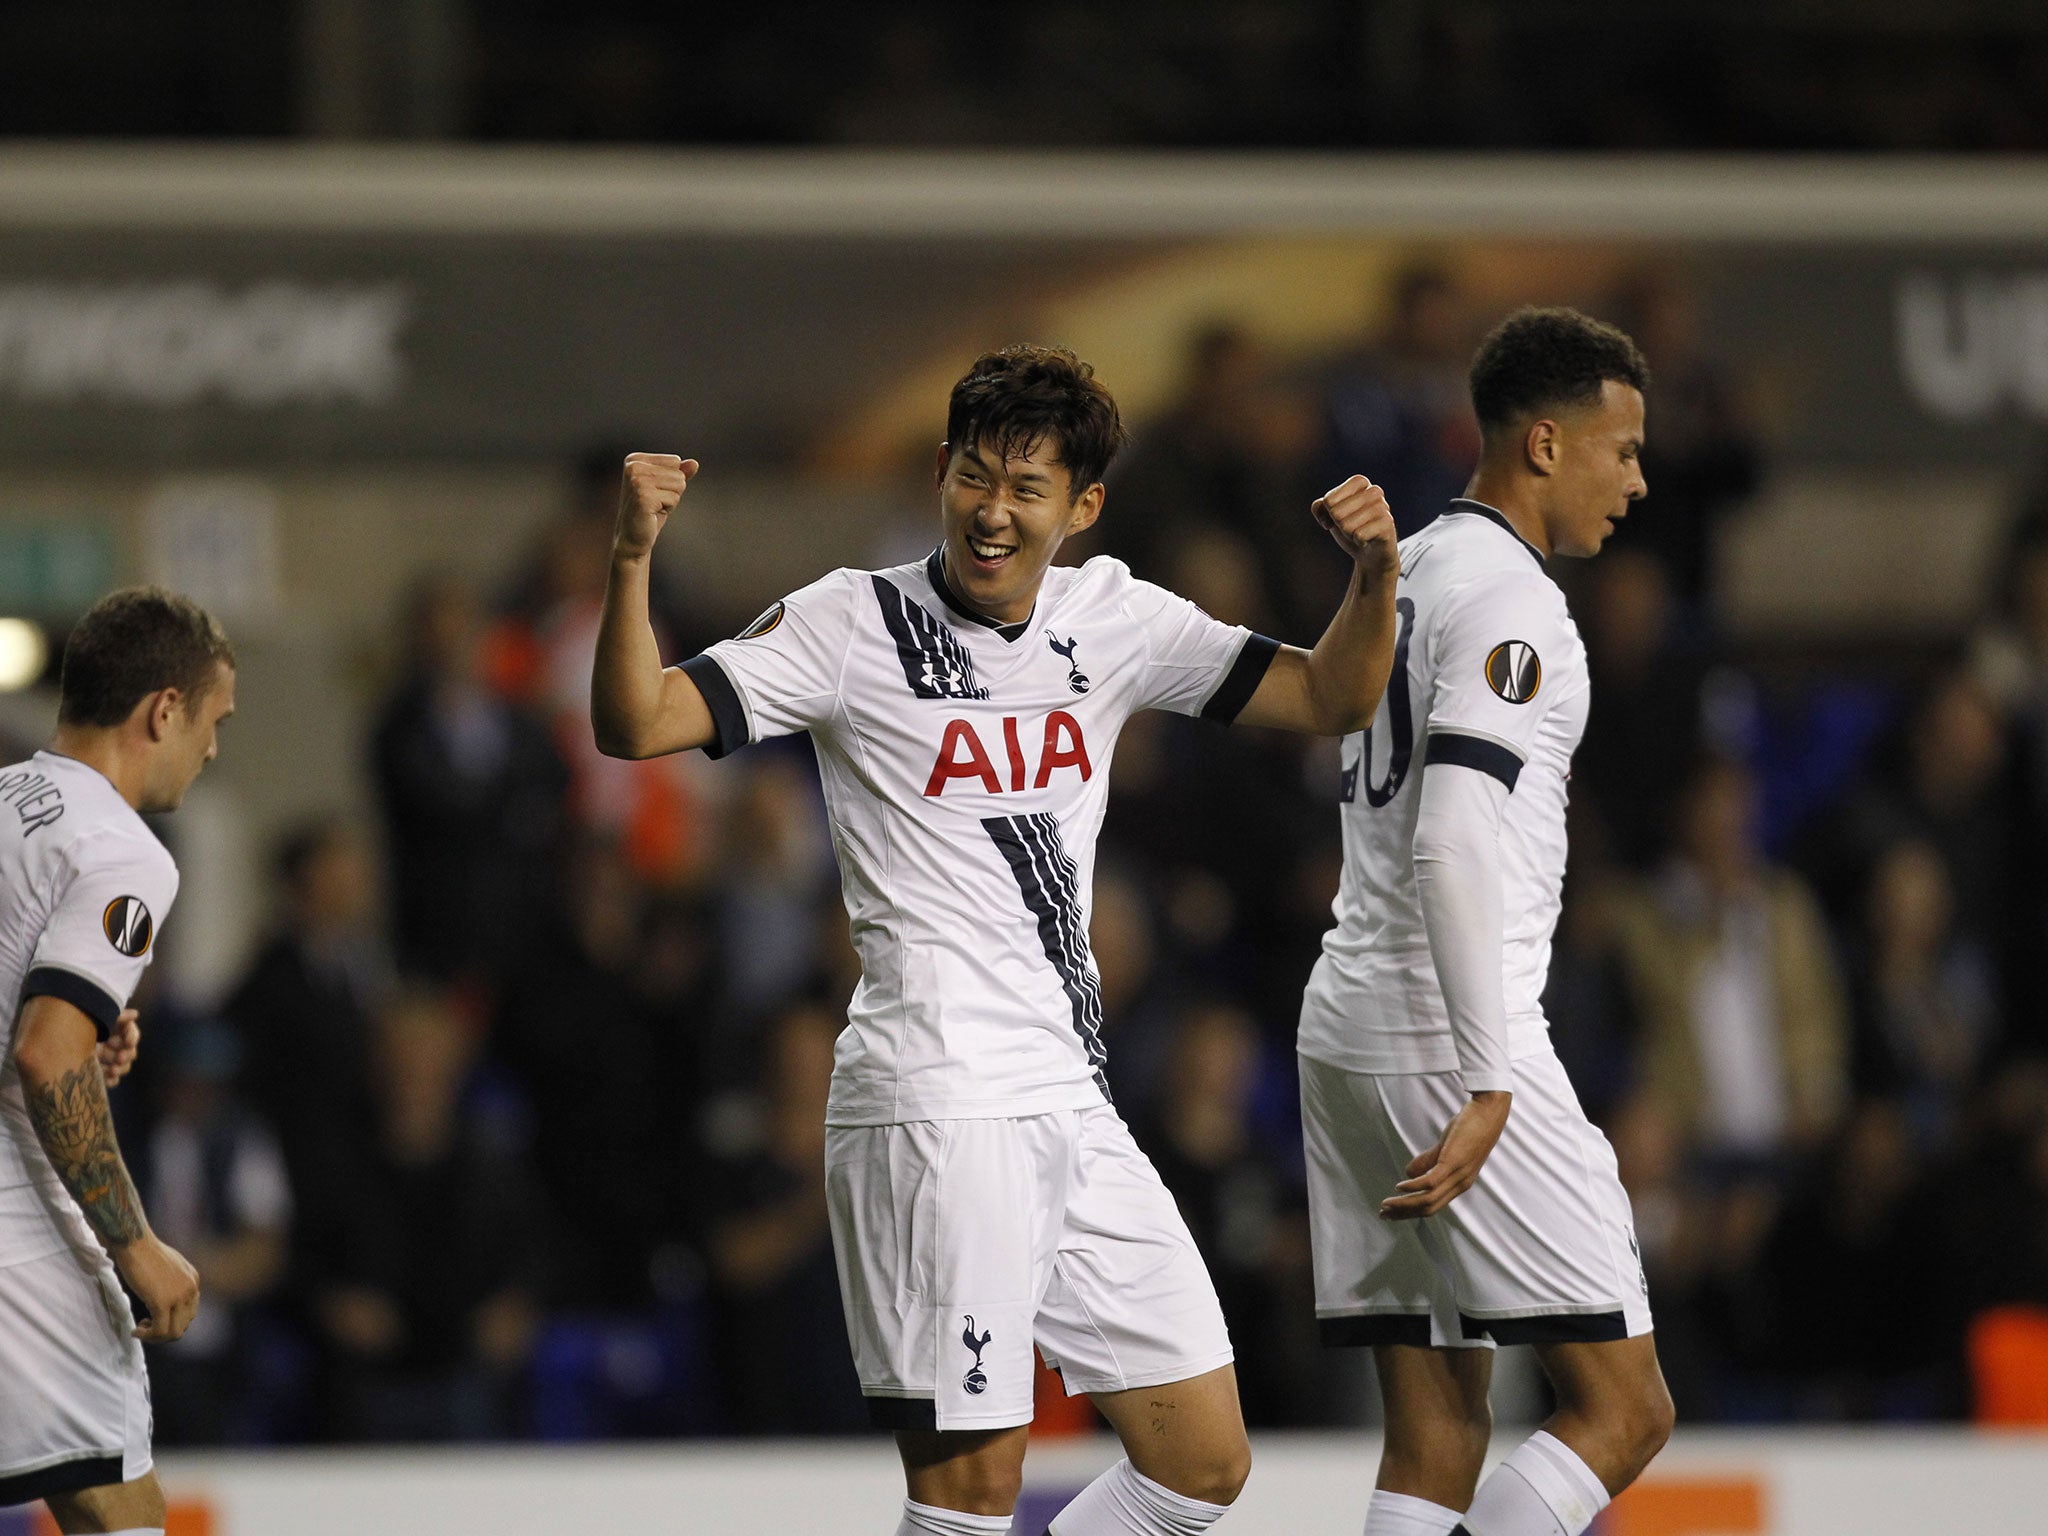 Tottenham forward Son-Heung min scored a hat-trick against Qarabag at White Hart Lane